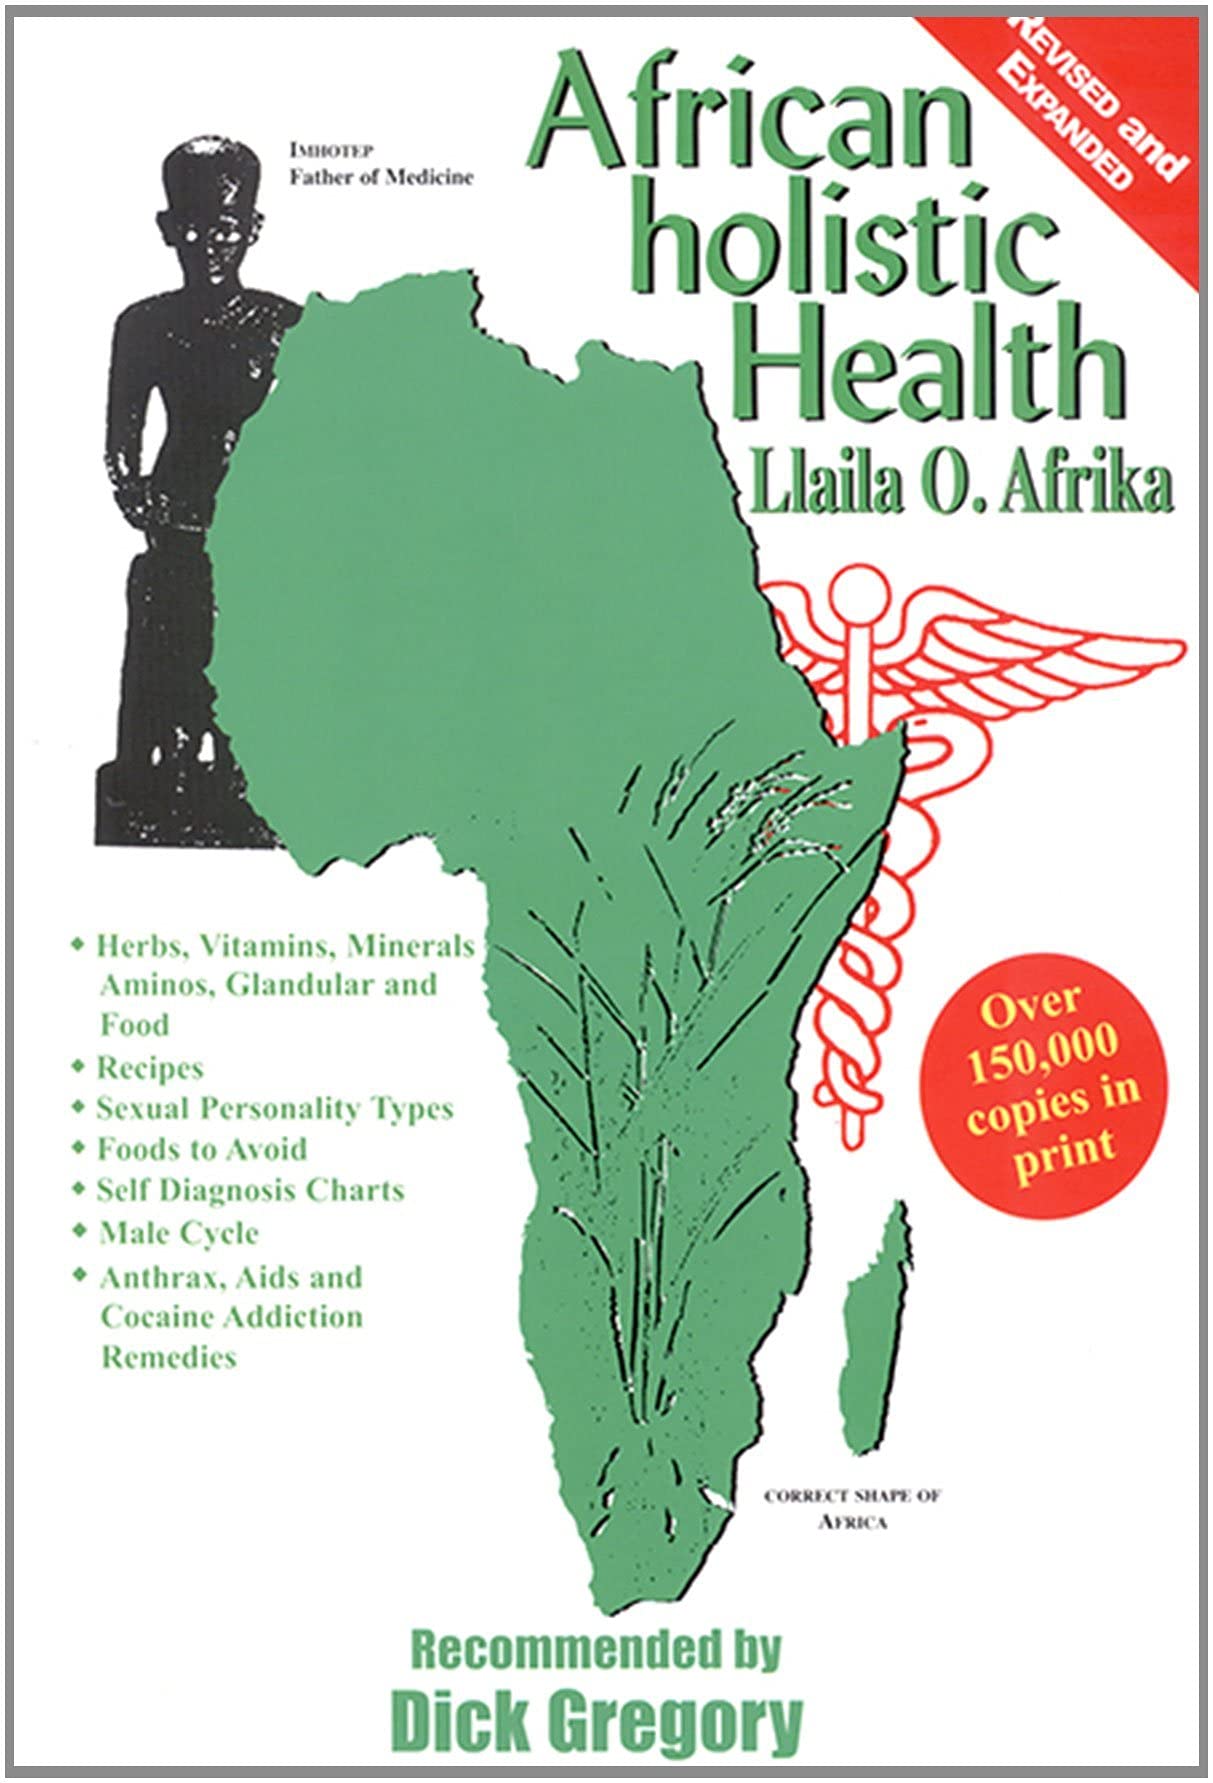 African Holistic Health (Revised, Expanded) - SureShot Books Publishing LLC